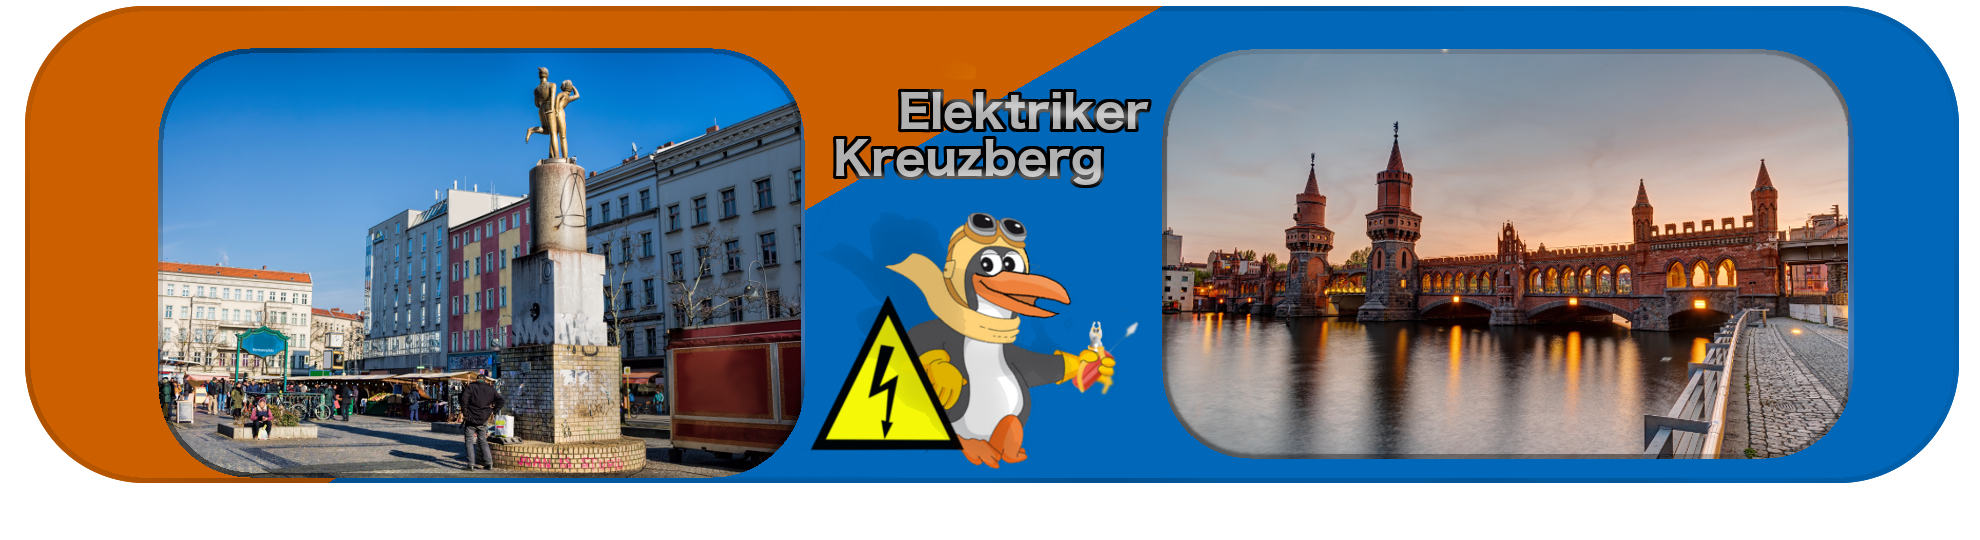 Elektriker Kreuzberg